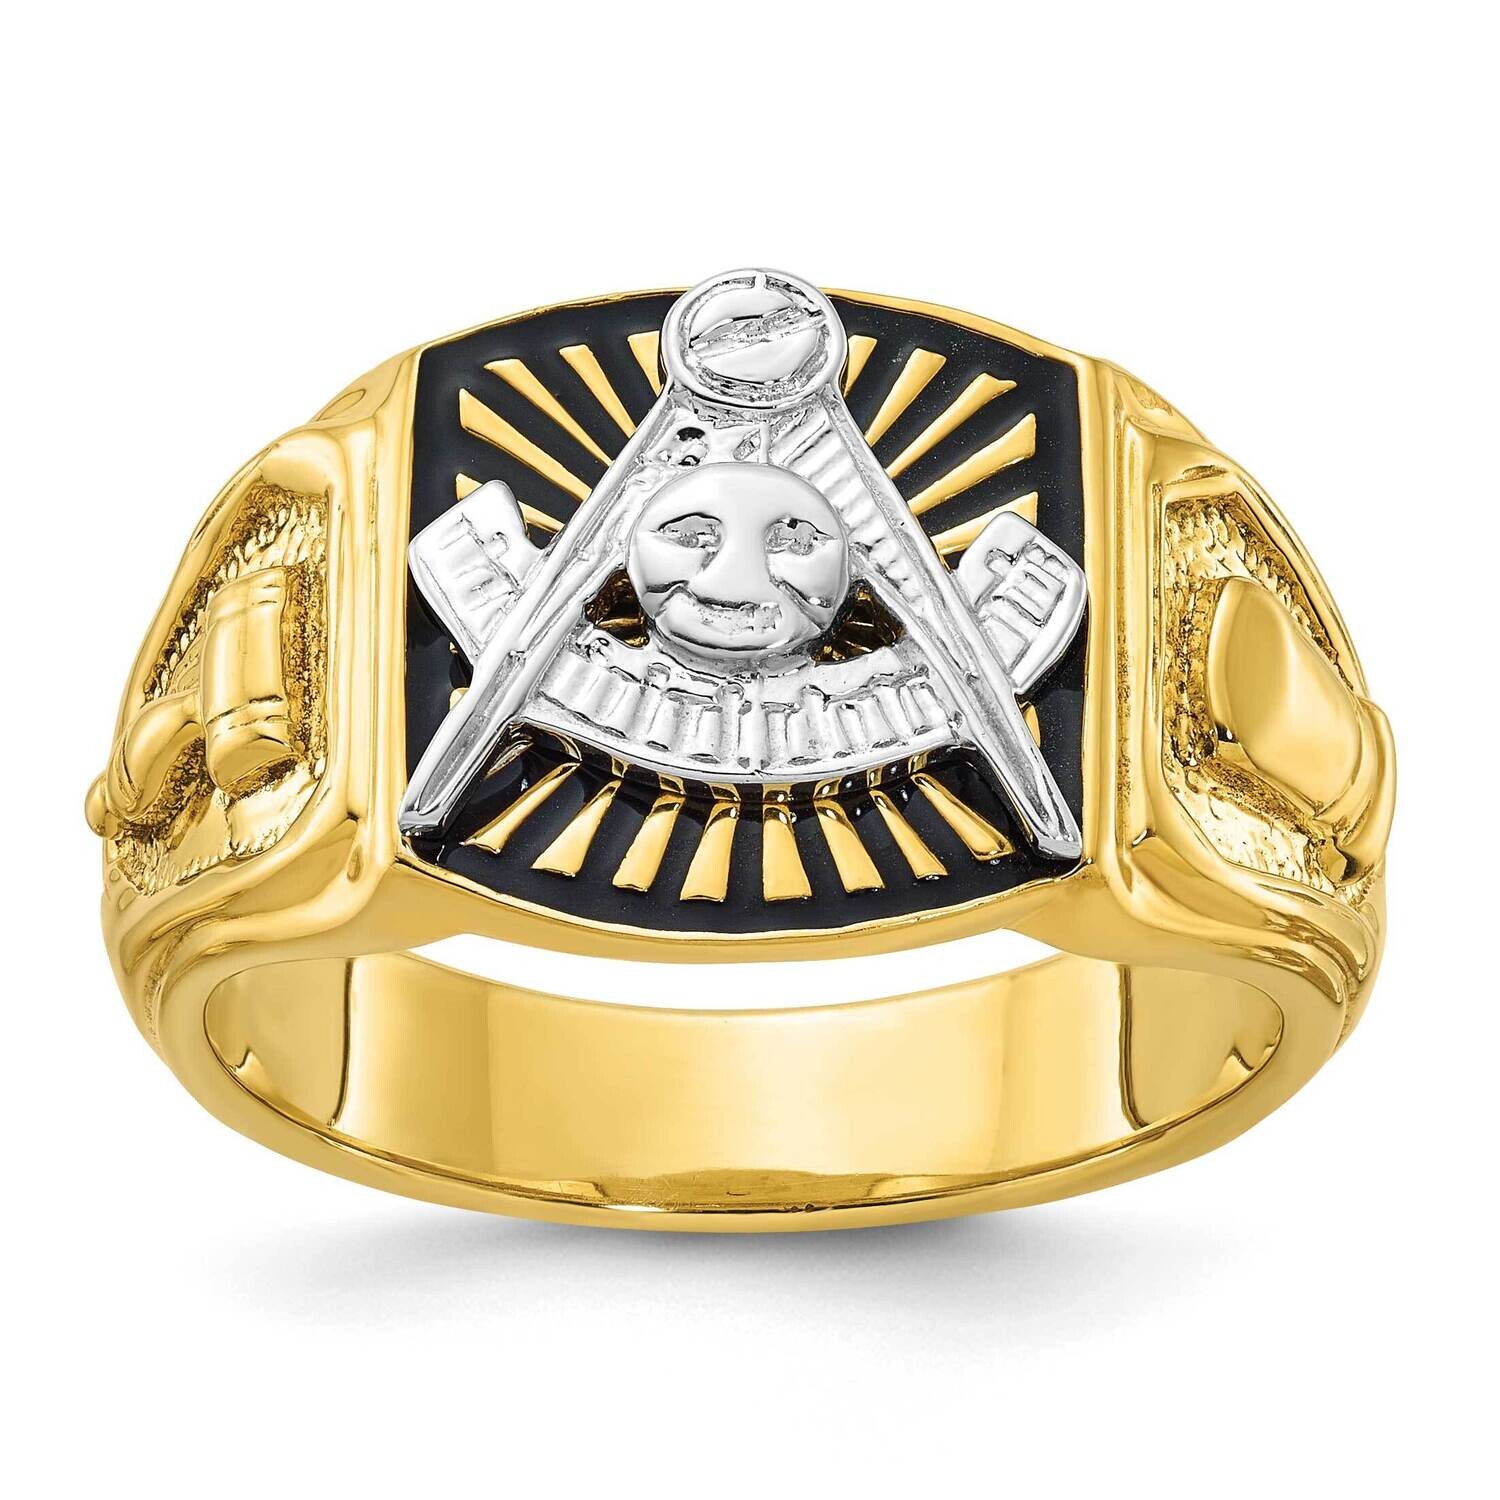 Ibgoodman Men's Polished Textured Black Enamel Past Master Masonic Ring 14k Two-Tone Gold B57632-4YW